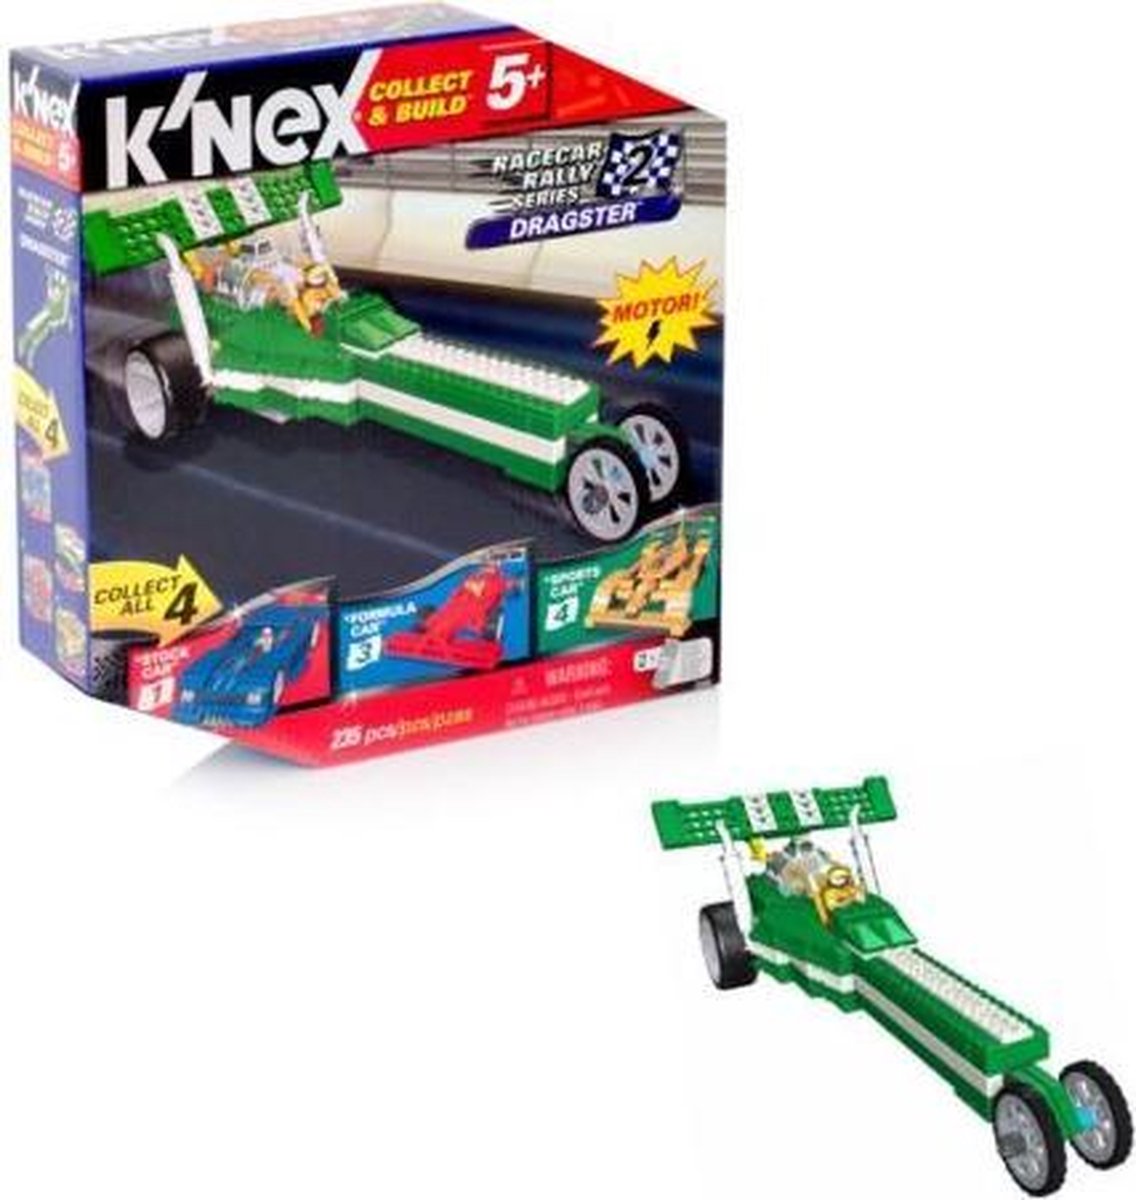 K'NEX - Collect & Build - Nr.2 - Racecar rally series - Dragster